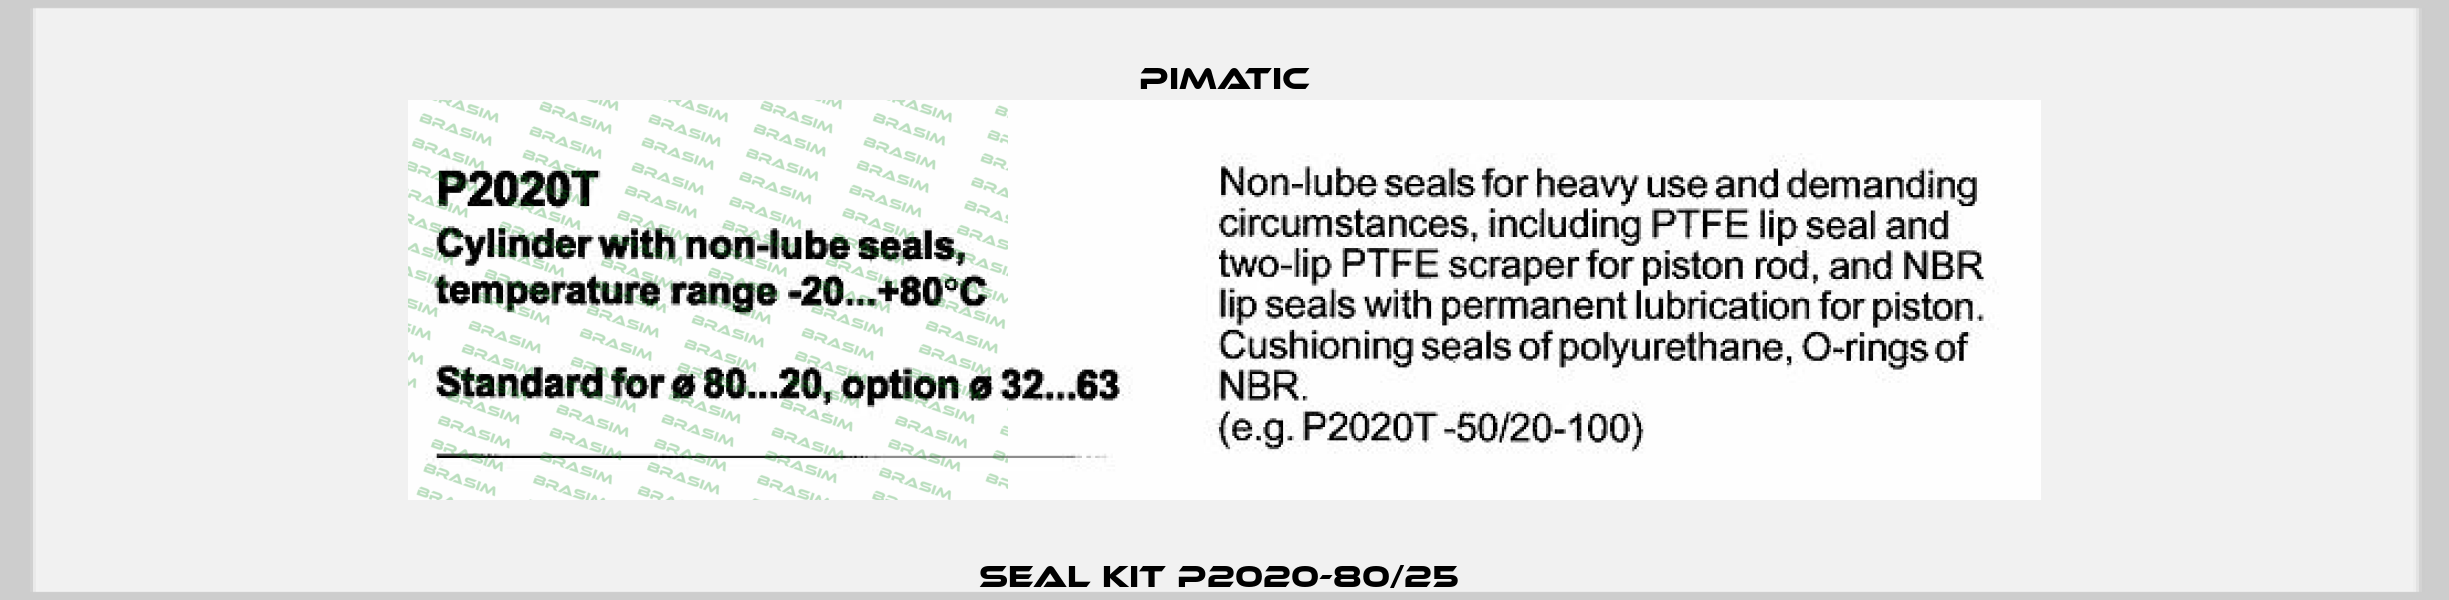 SEAL KIT P2020-80/25  Pimatic